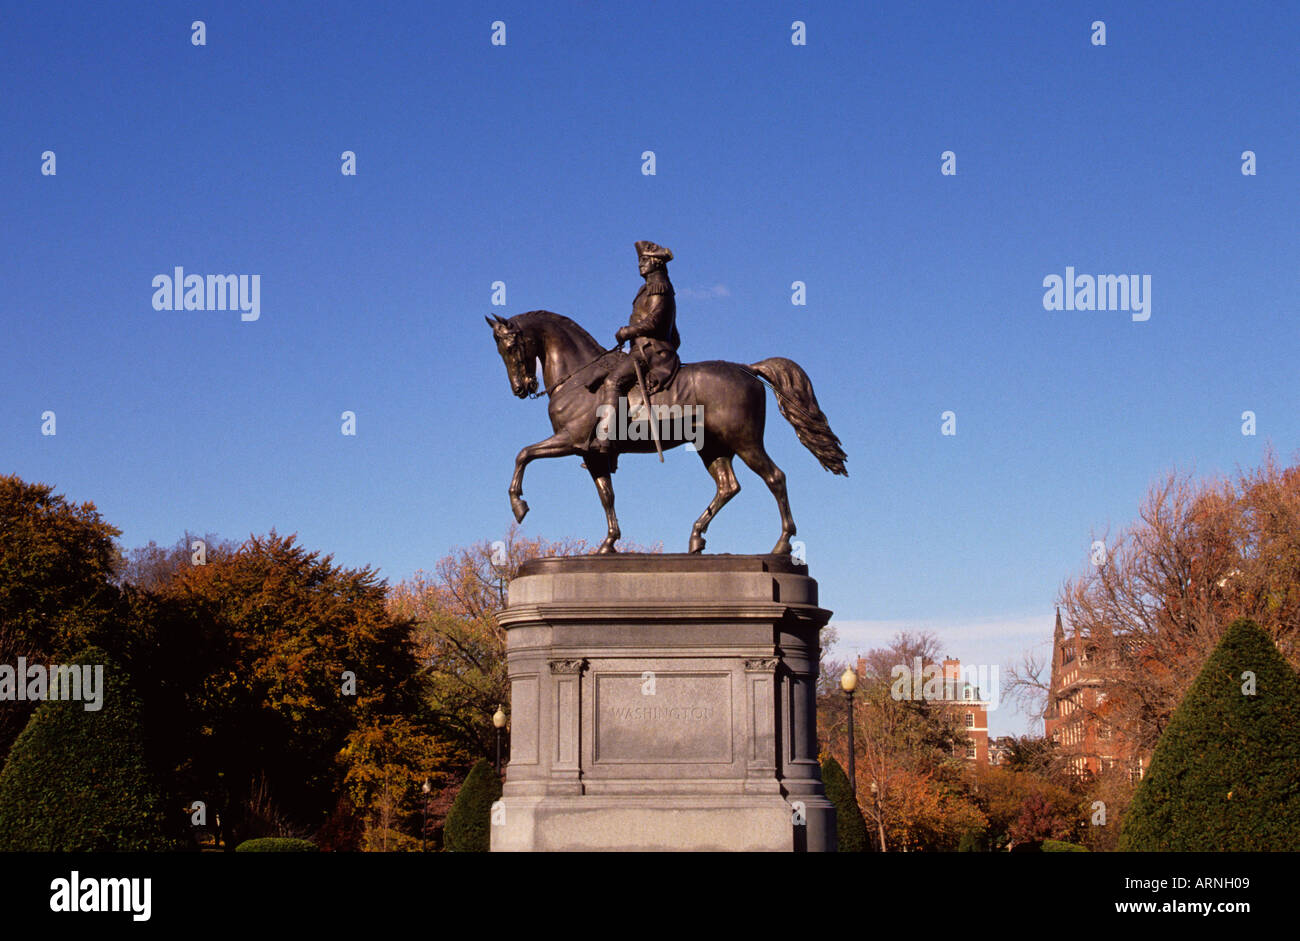 USA Boston Massachusetts Statue of General George Washington on a Horse on Boston Common Stock Photo